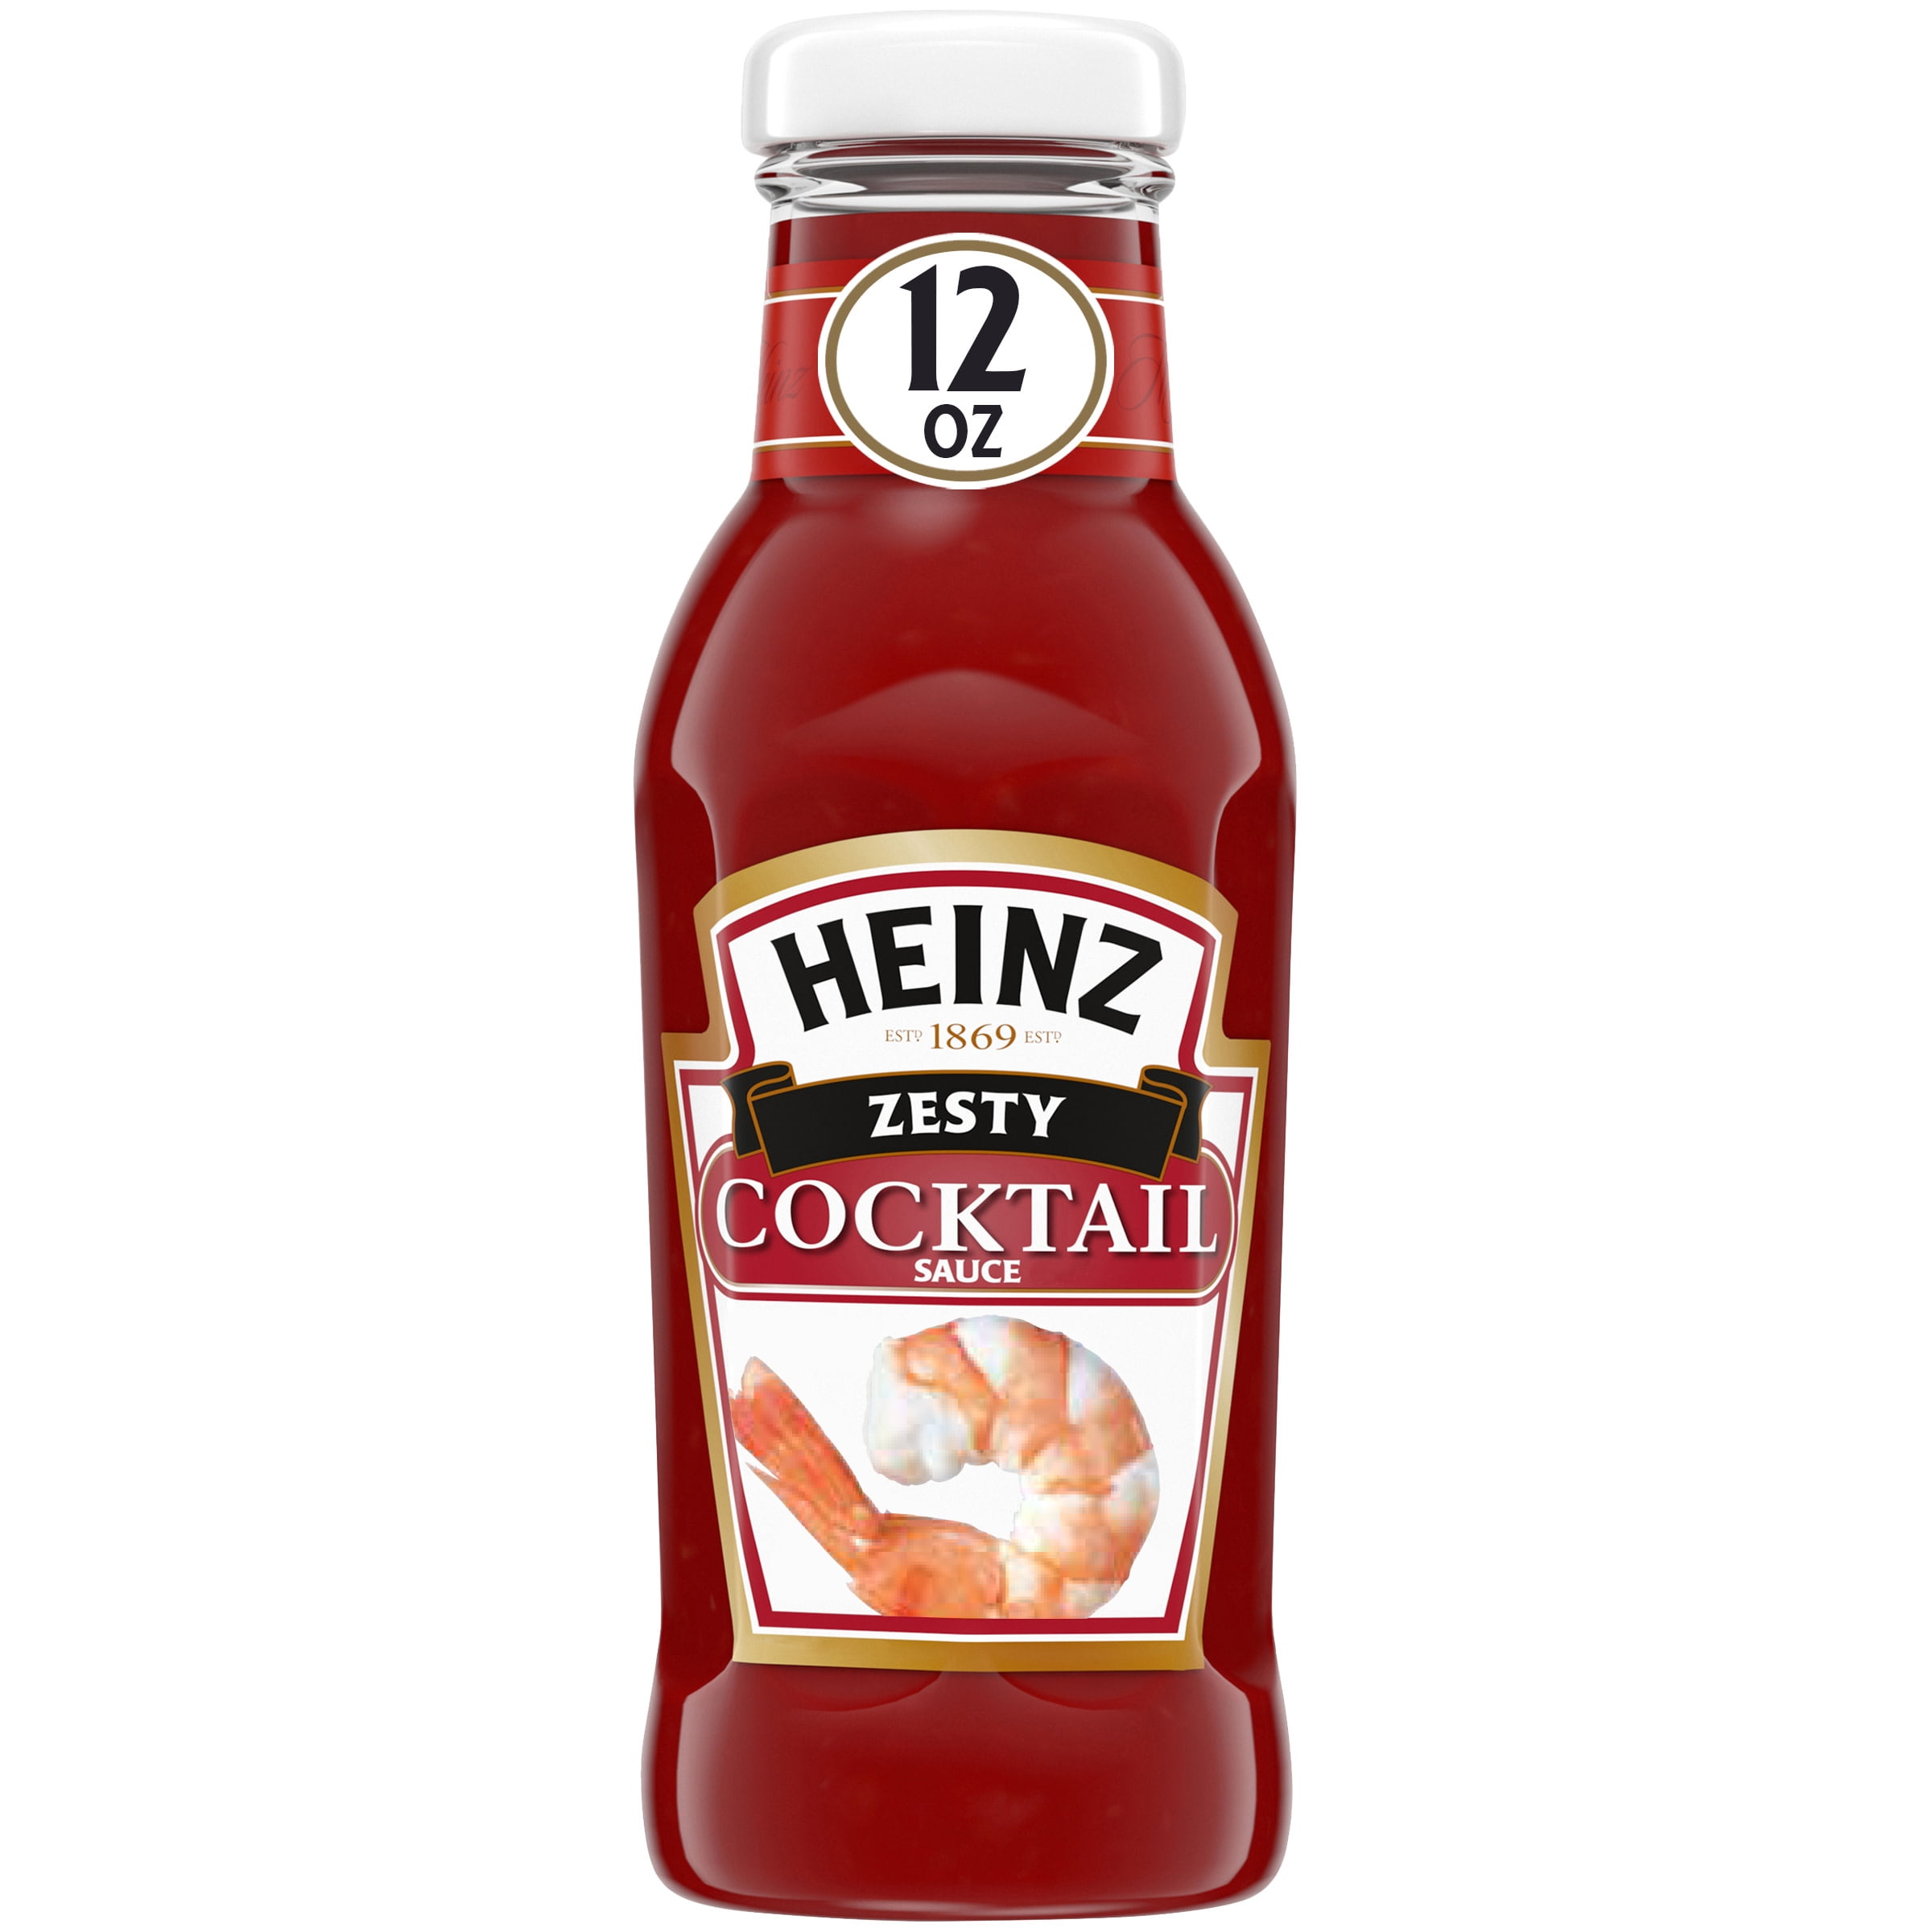 Heinz Zesty Cocktail Sauce, 12 oz Bottle - Walmart.com